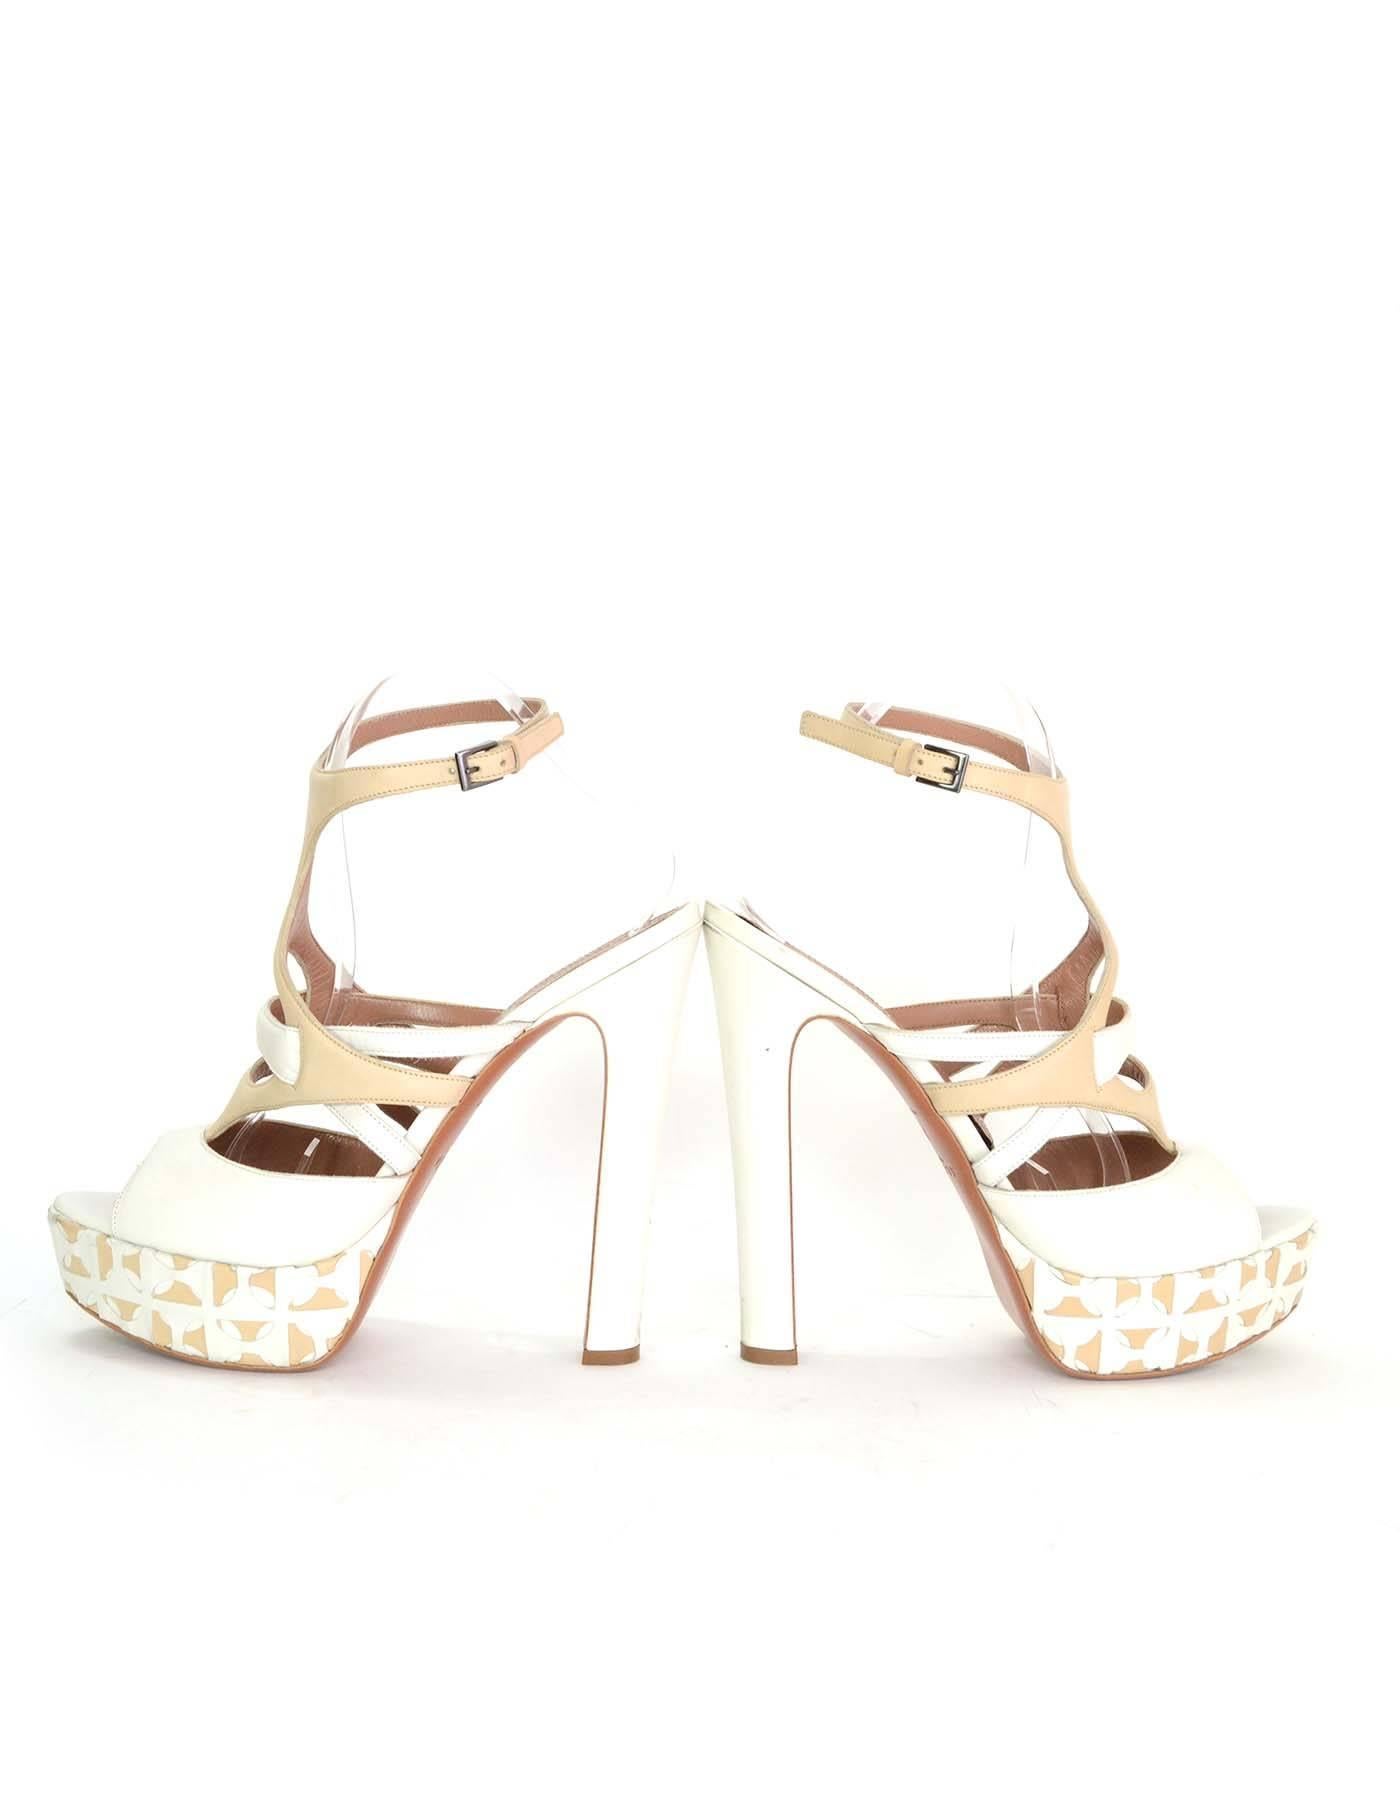 Alaia White & Beige Leather Platform Sandals sz 40 2